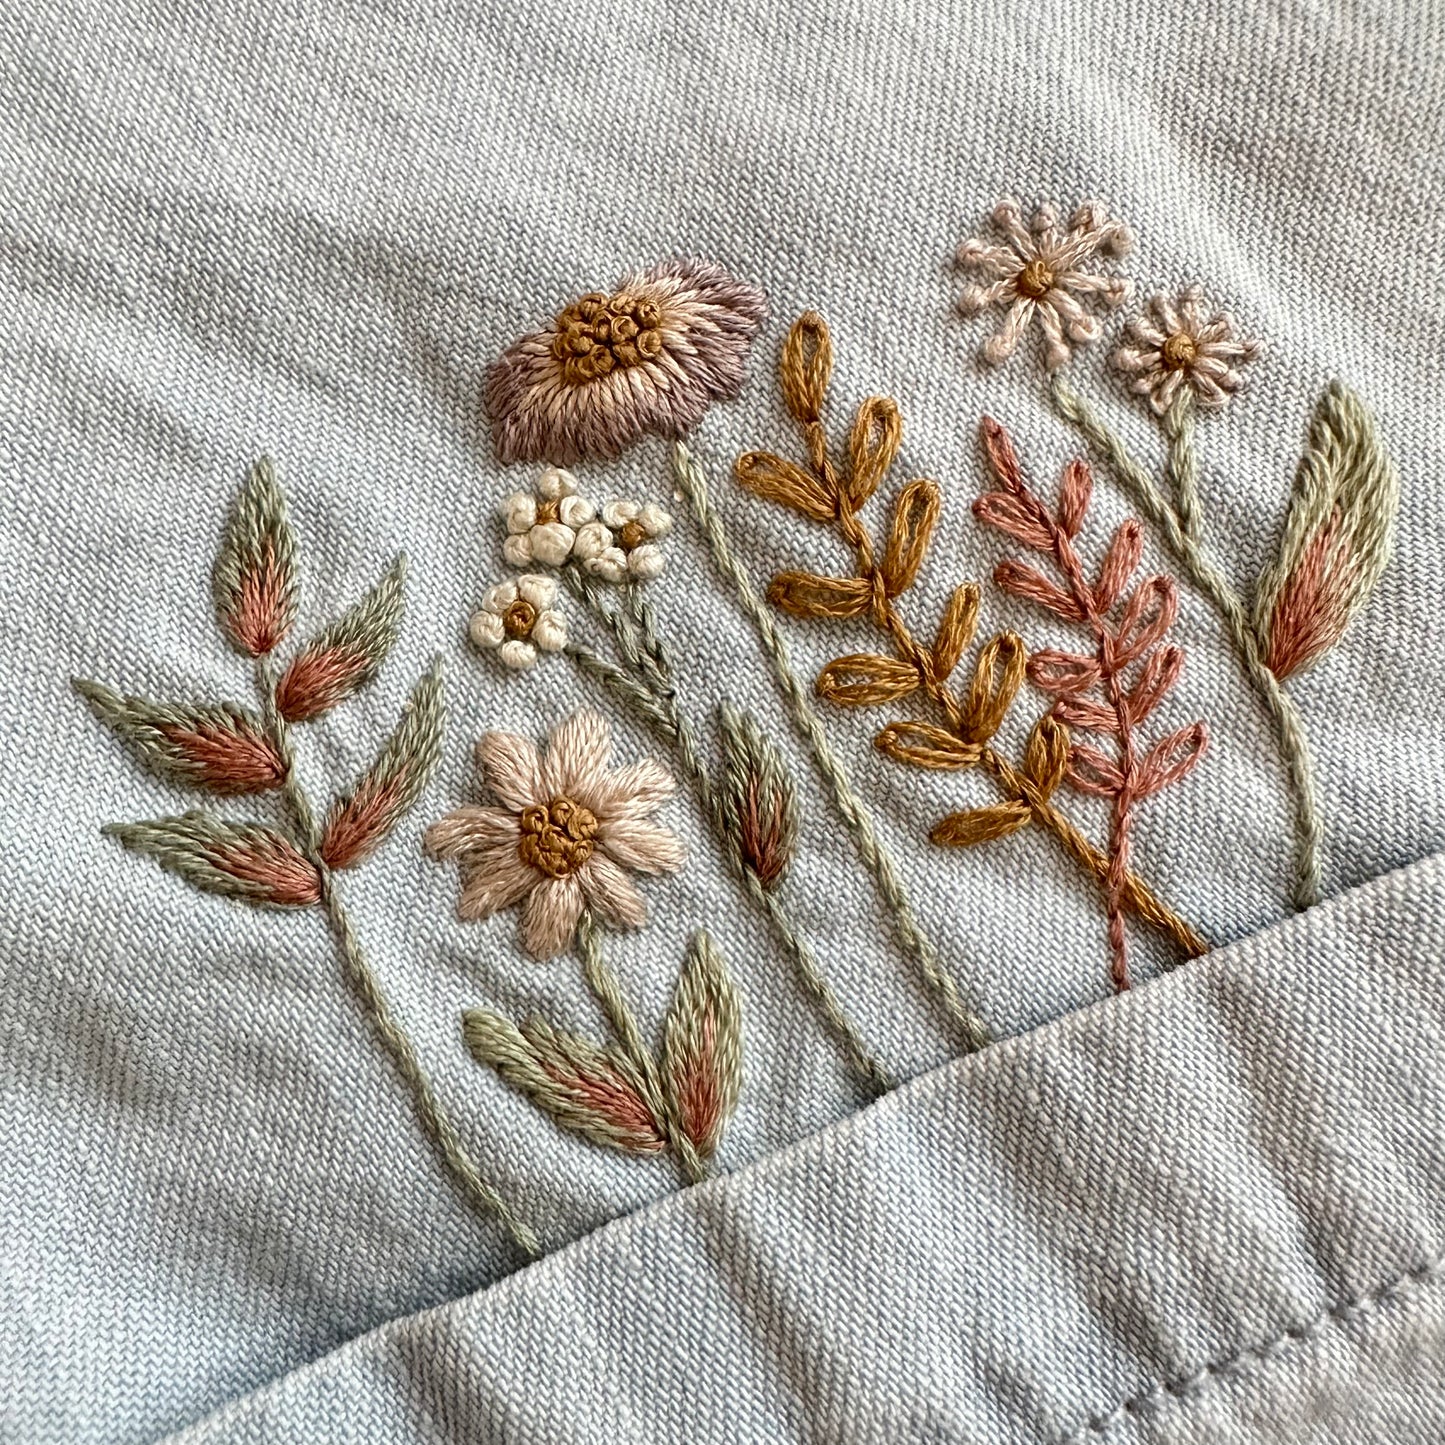 Boho Botanicals Stick & Stitch Embroidery Patterns